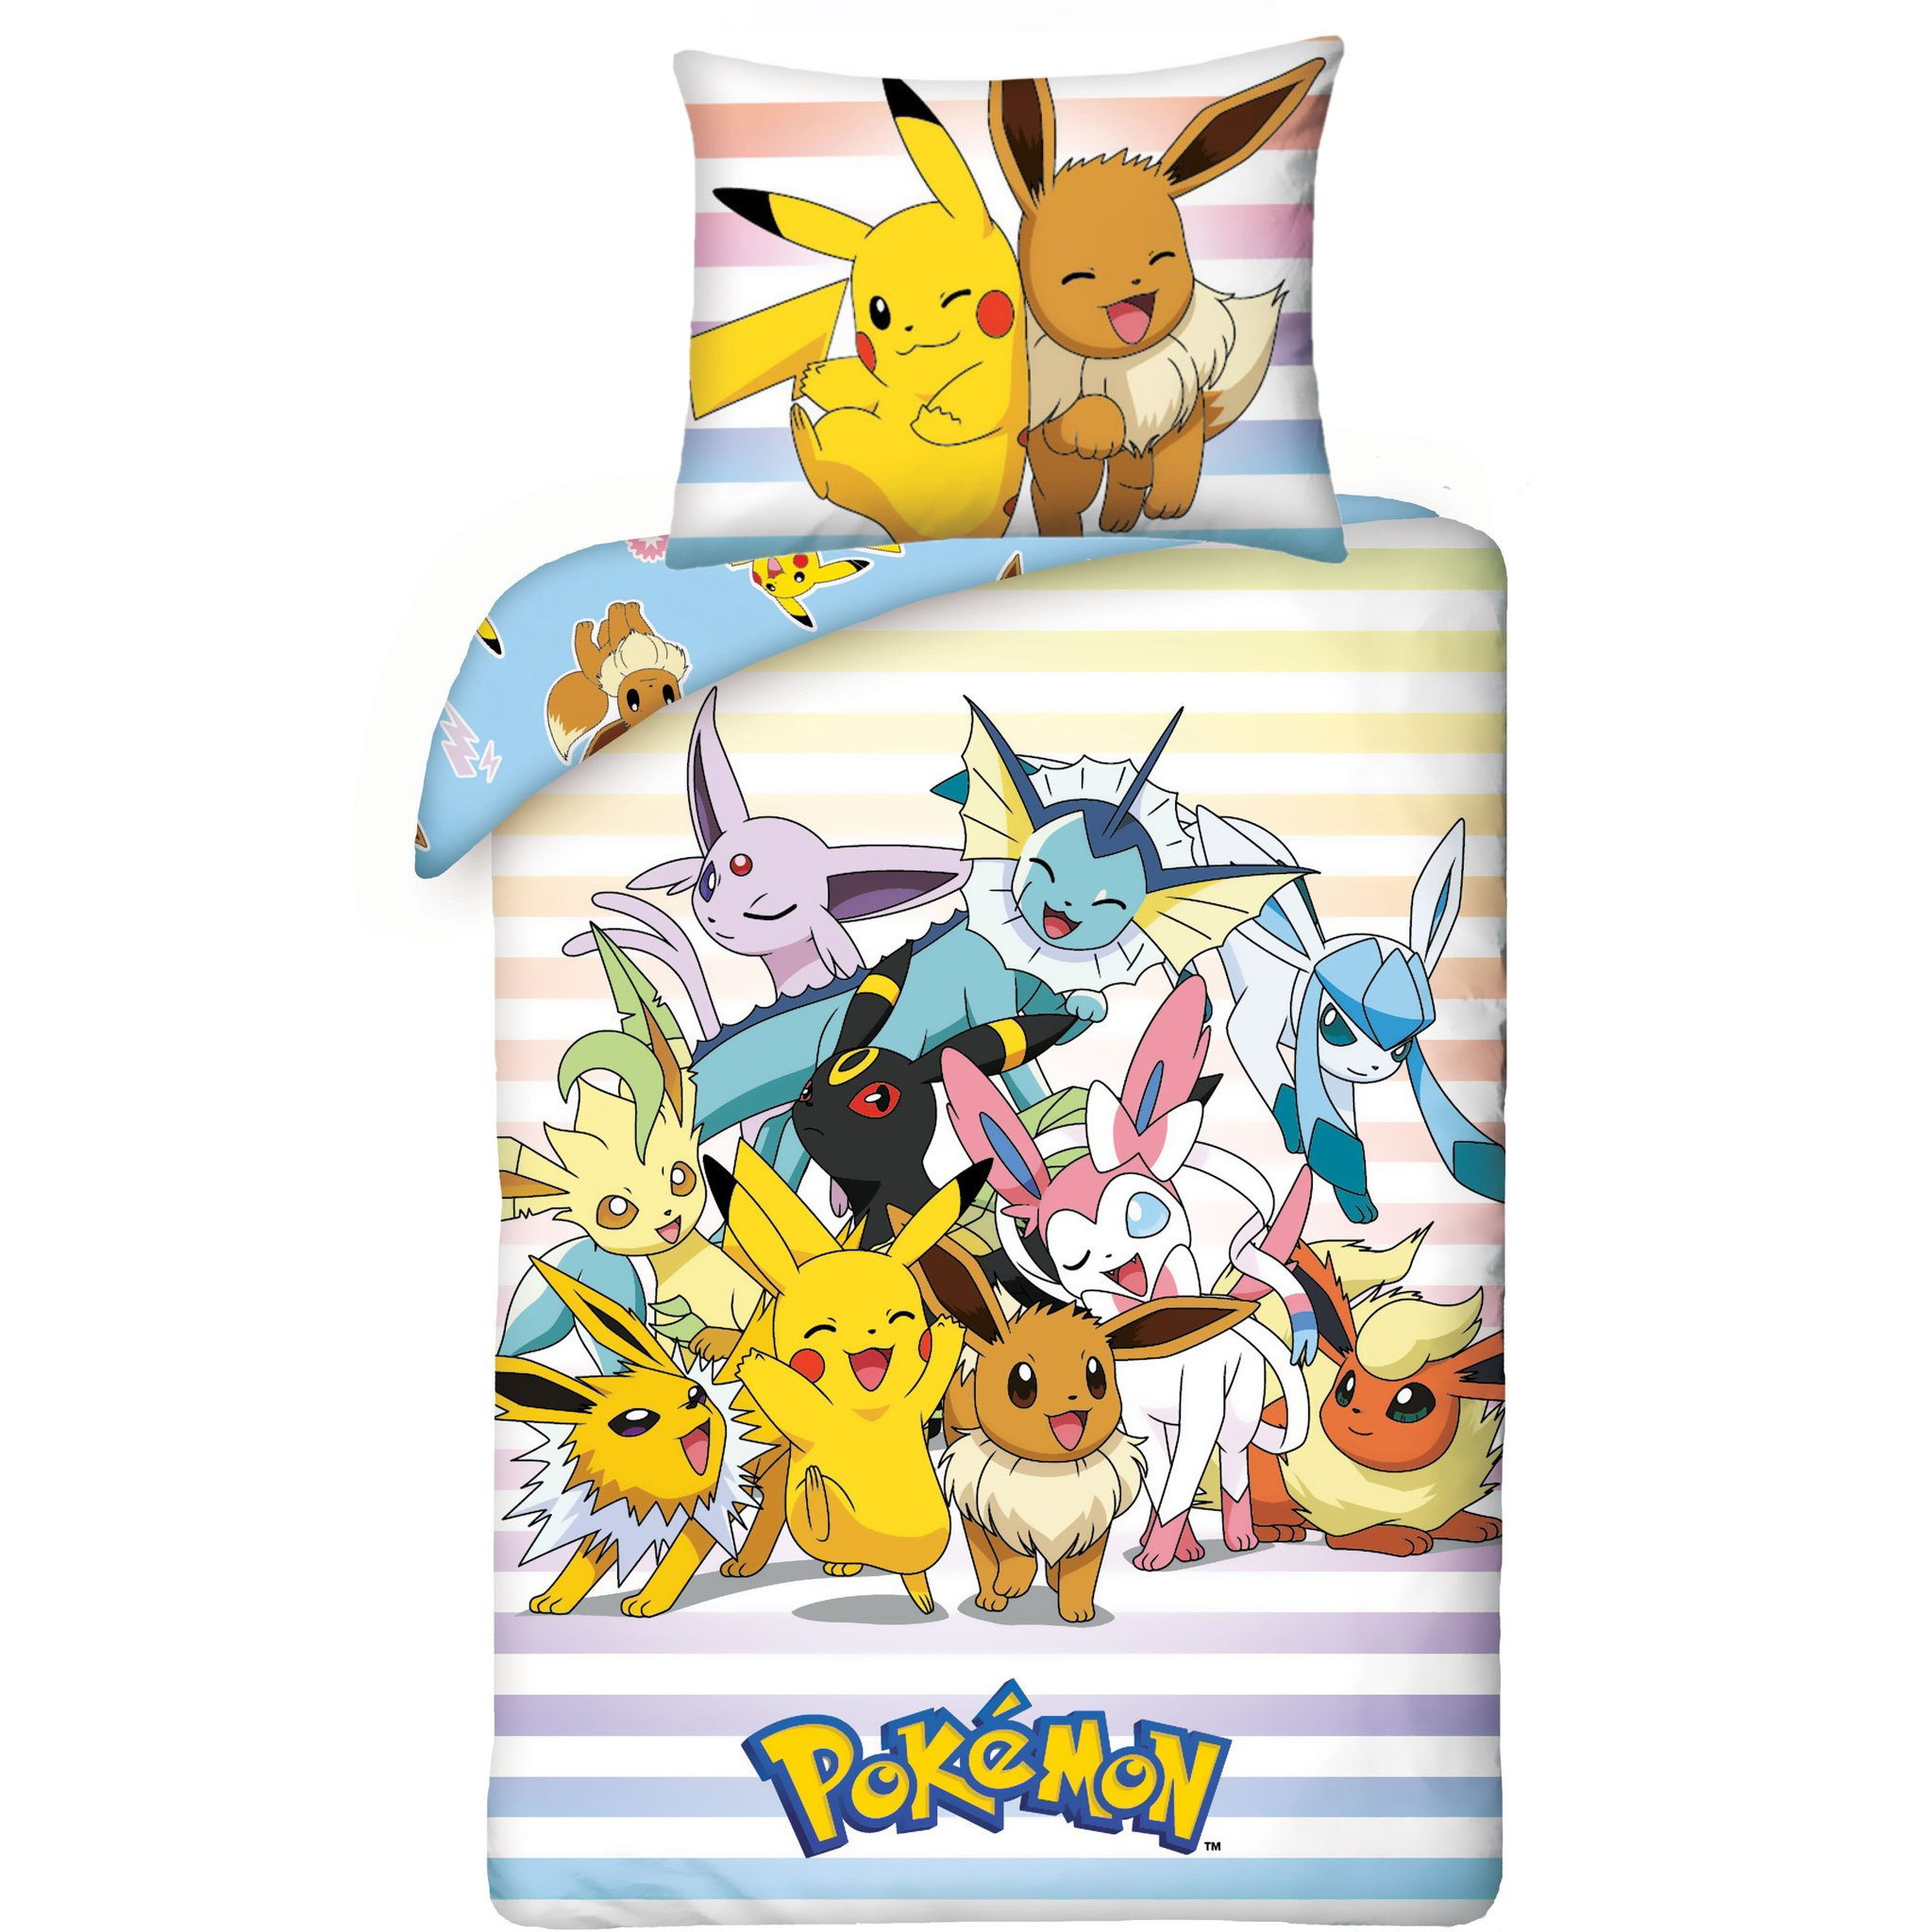 Pokemon Duvet cover, Catch 'Em All - Single - 140 x 200 cm - Cotton